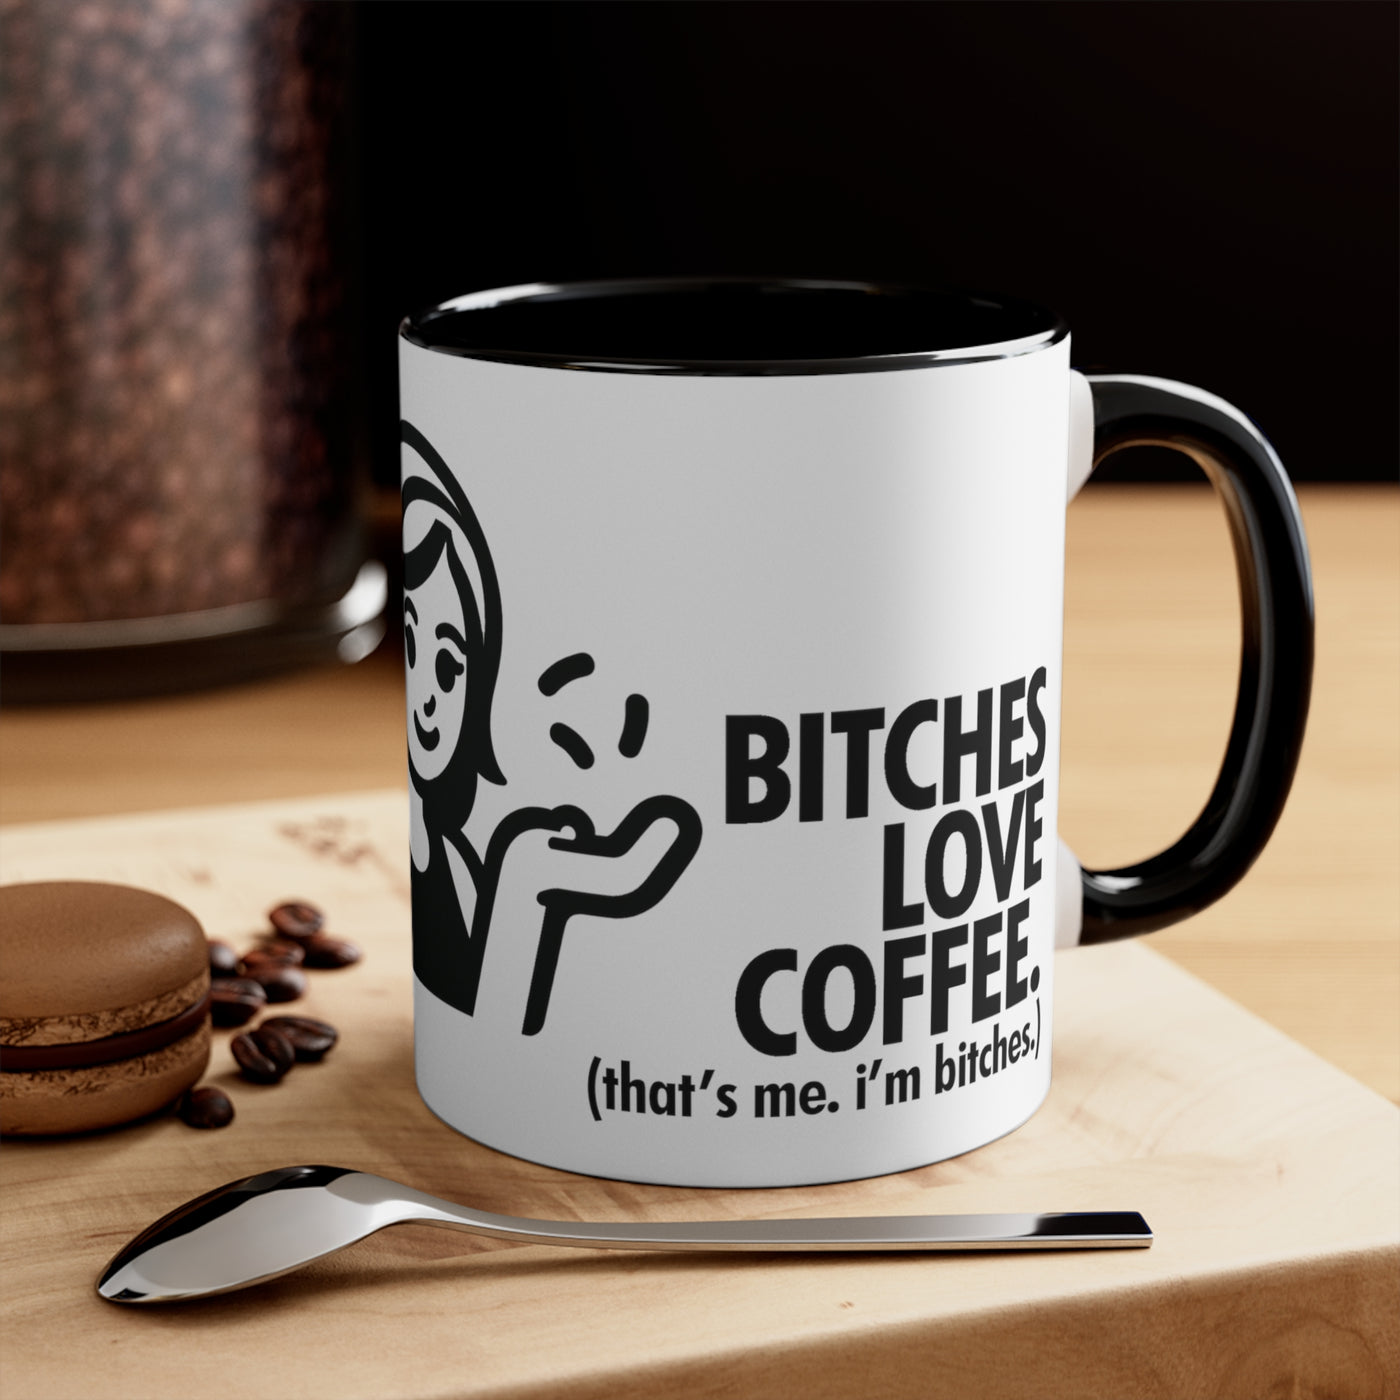 Bitches Love Coffee.